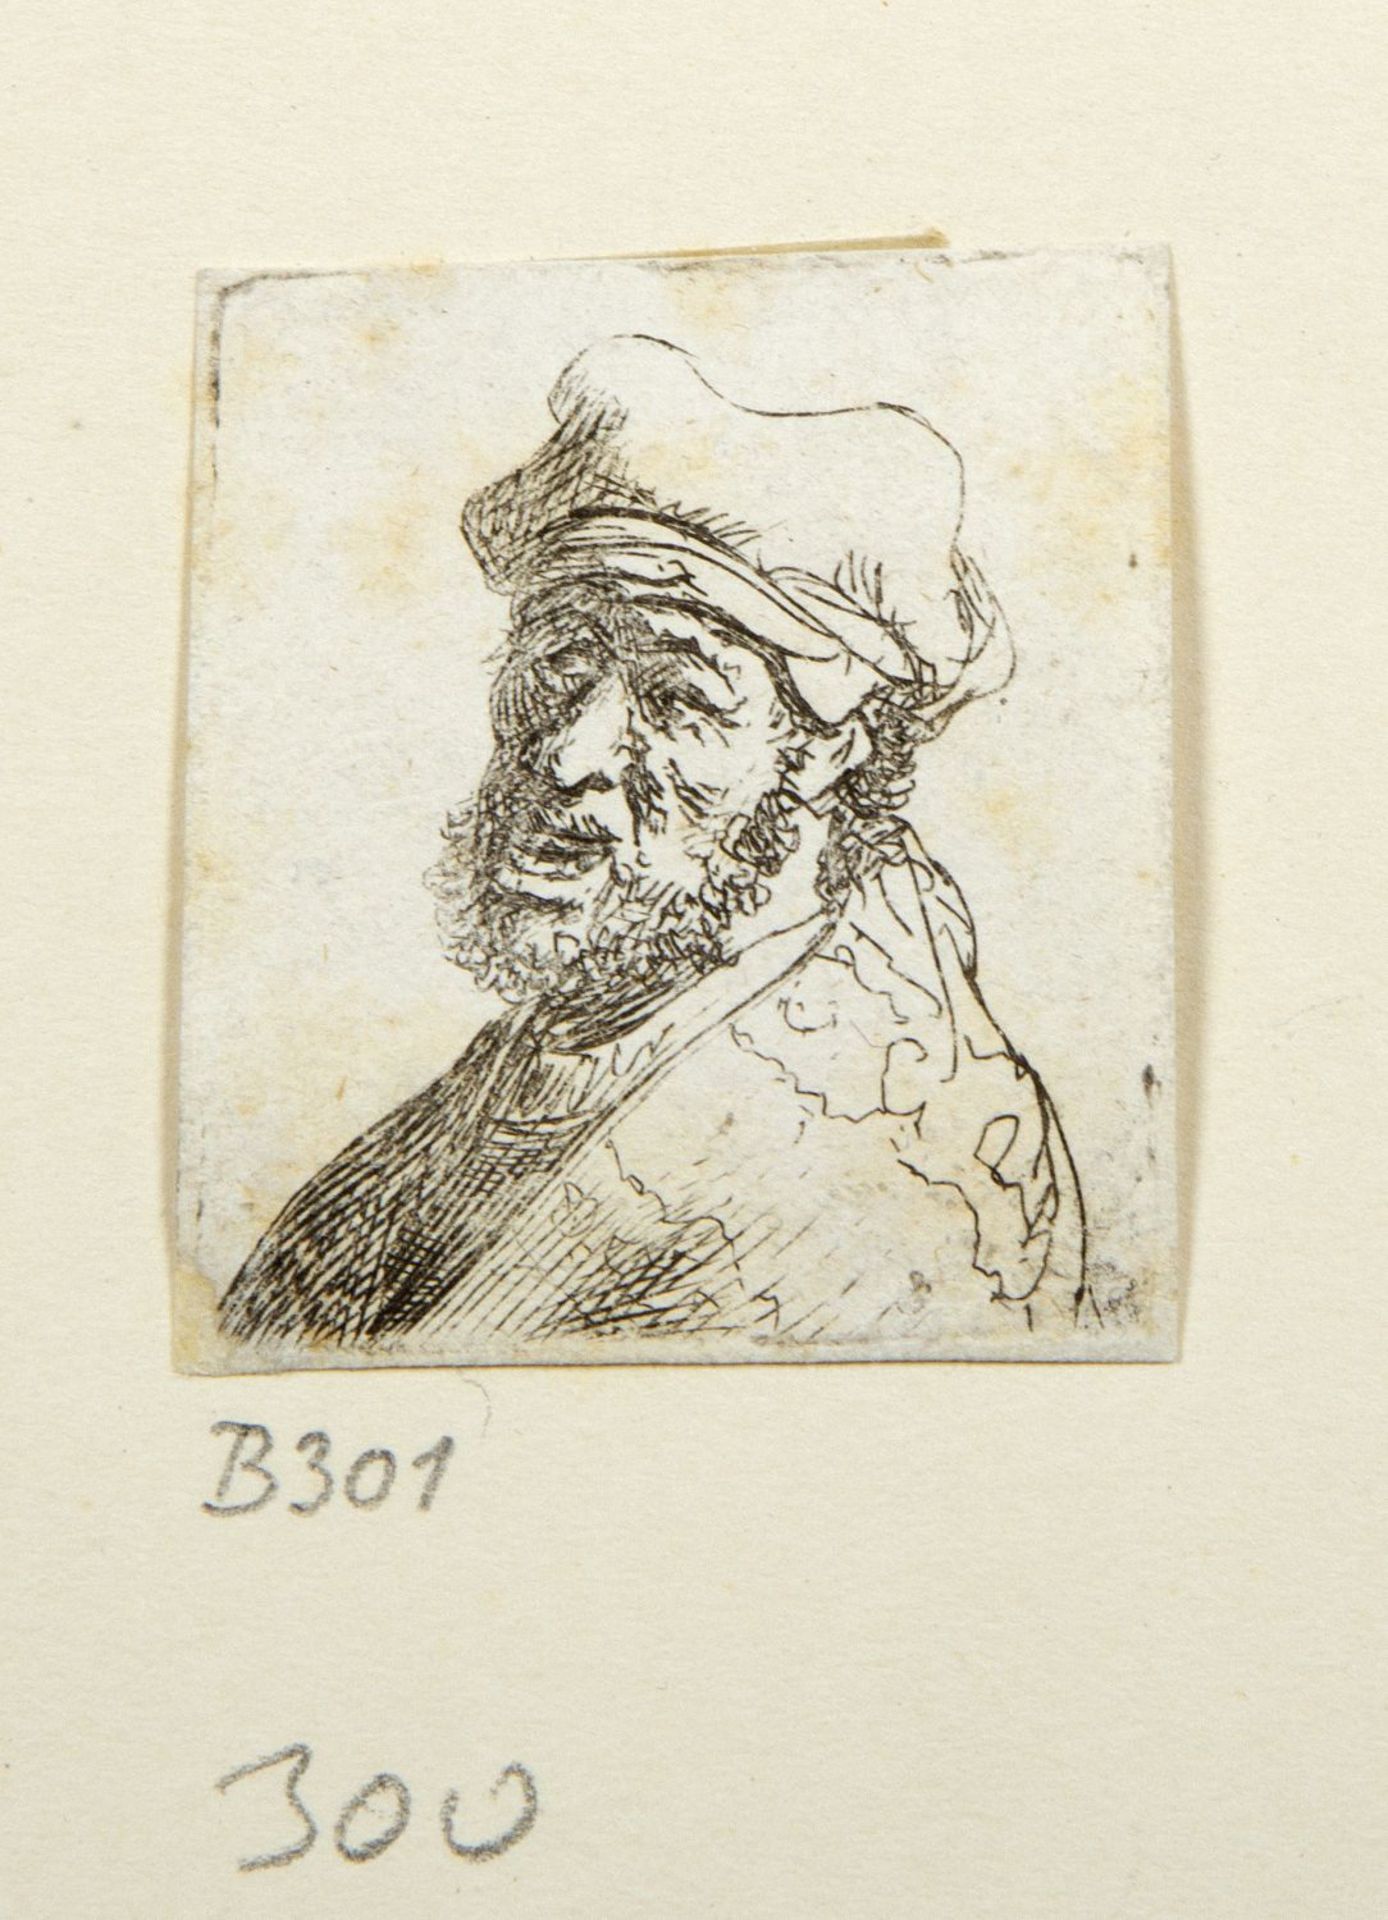 Rembrandt, Harmensz van Rijn. 1606 Leiden - Amsterdam 1669